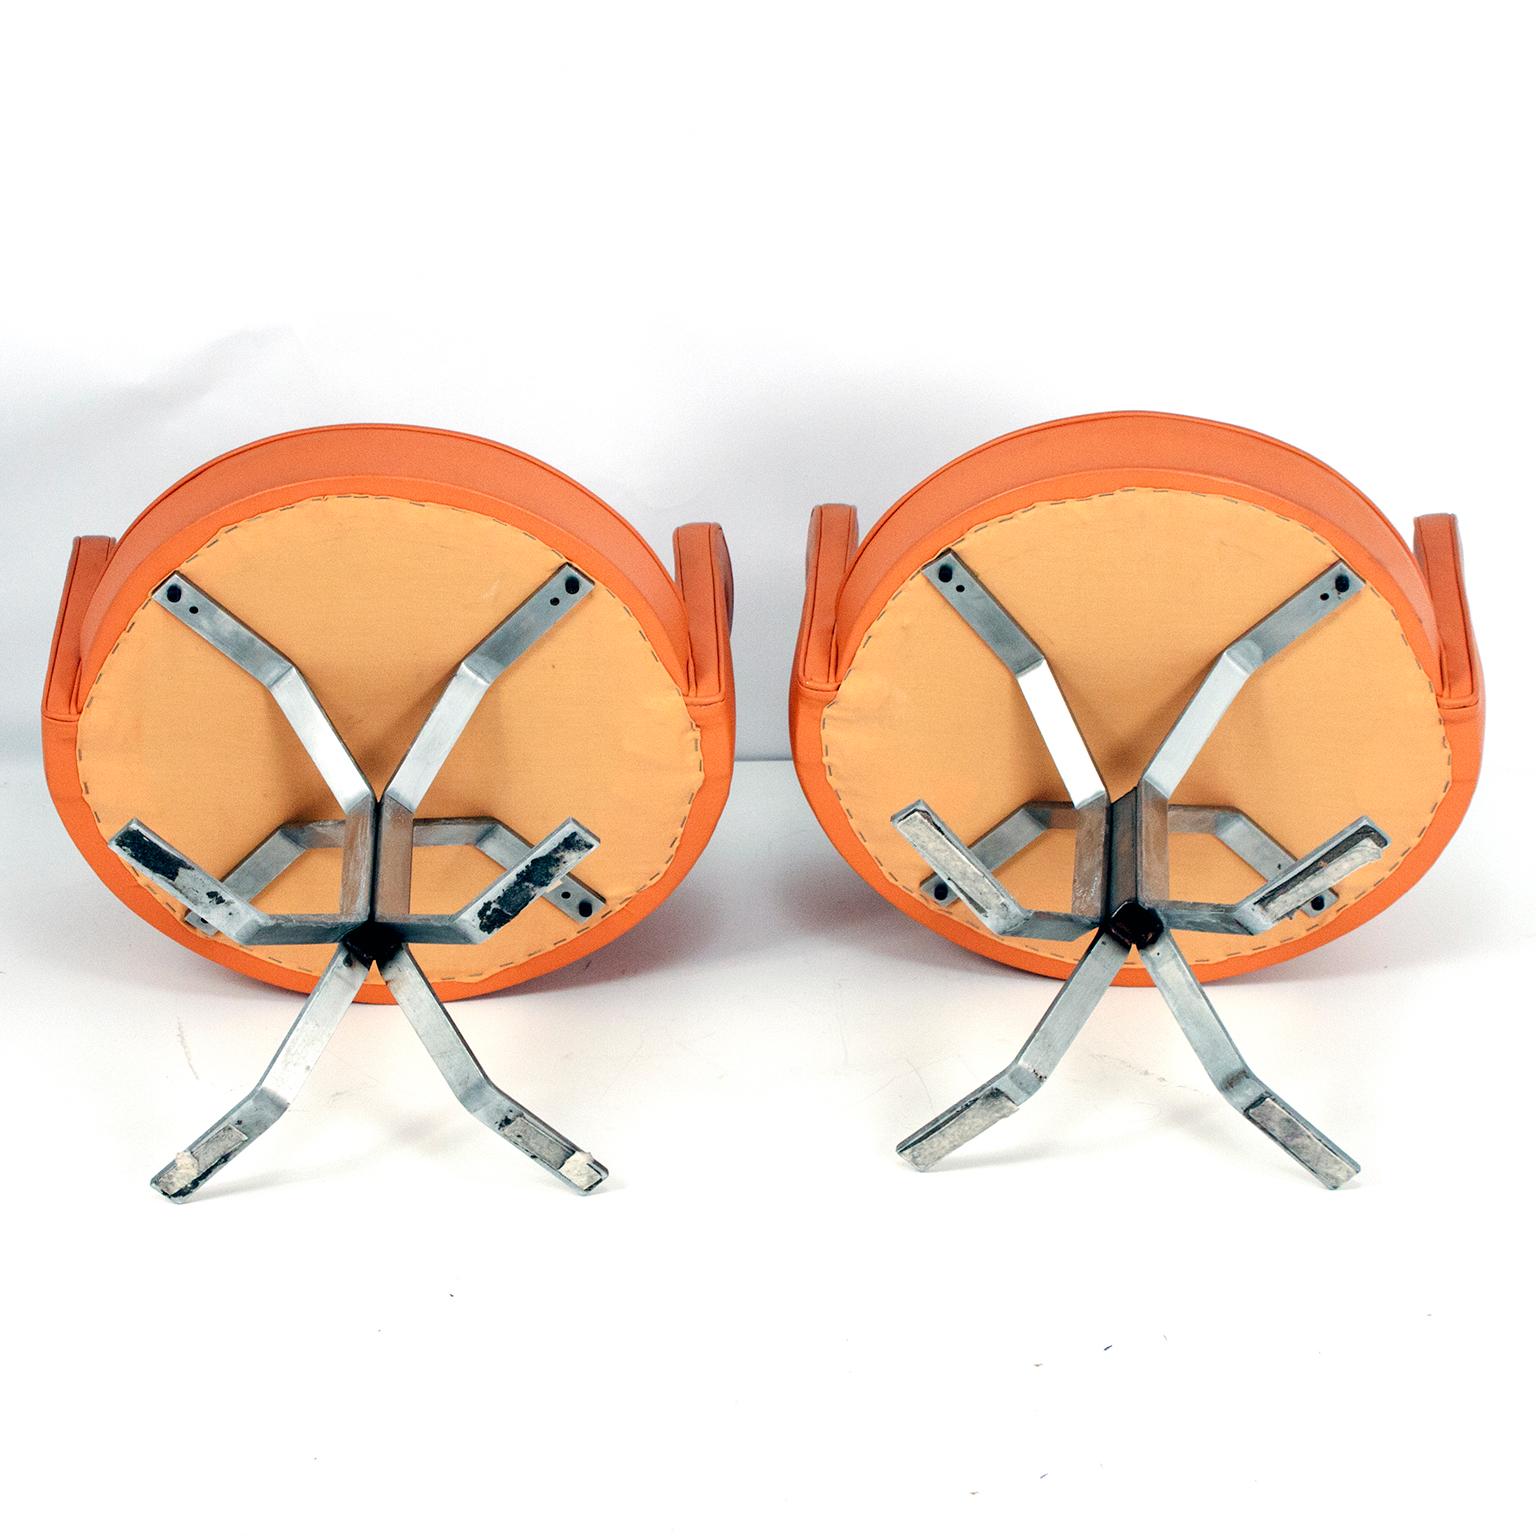 Late 20th Century Jordi Vilanova pair of Midcentury Orange Leather Chairs, 1970s